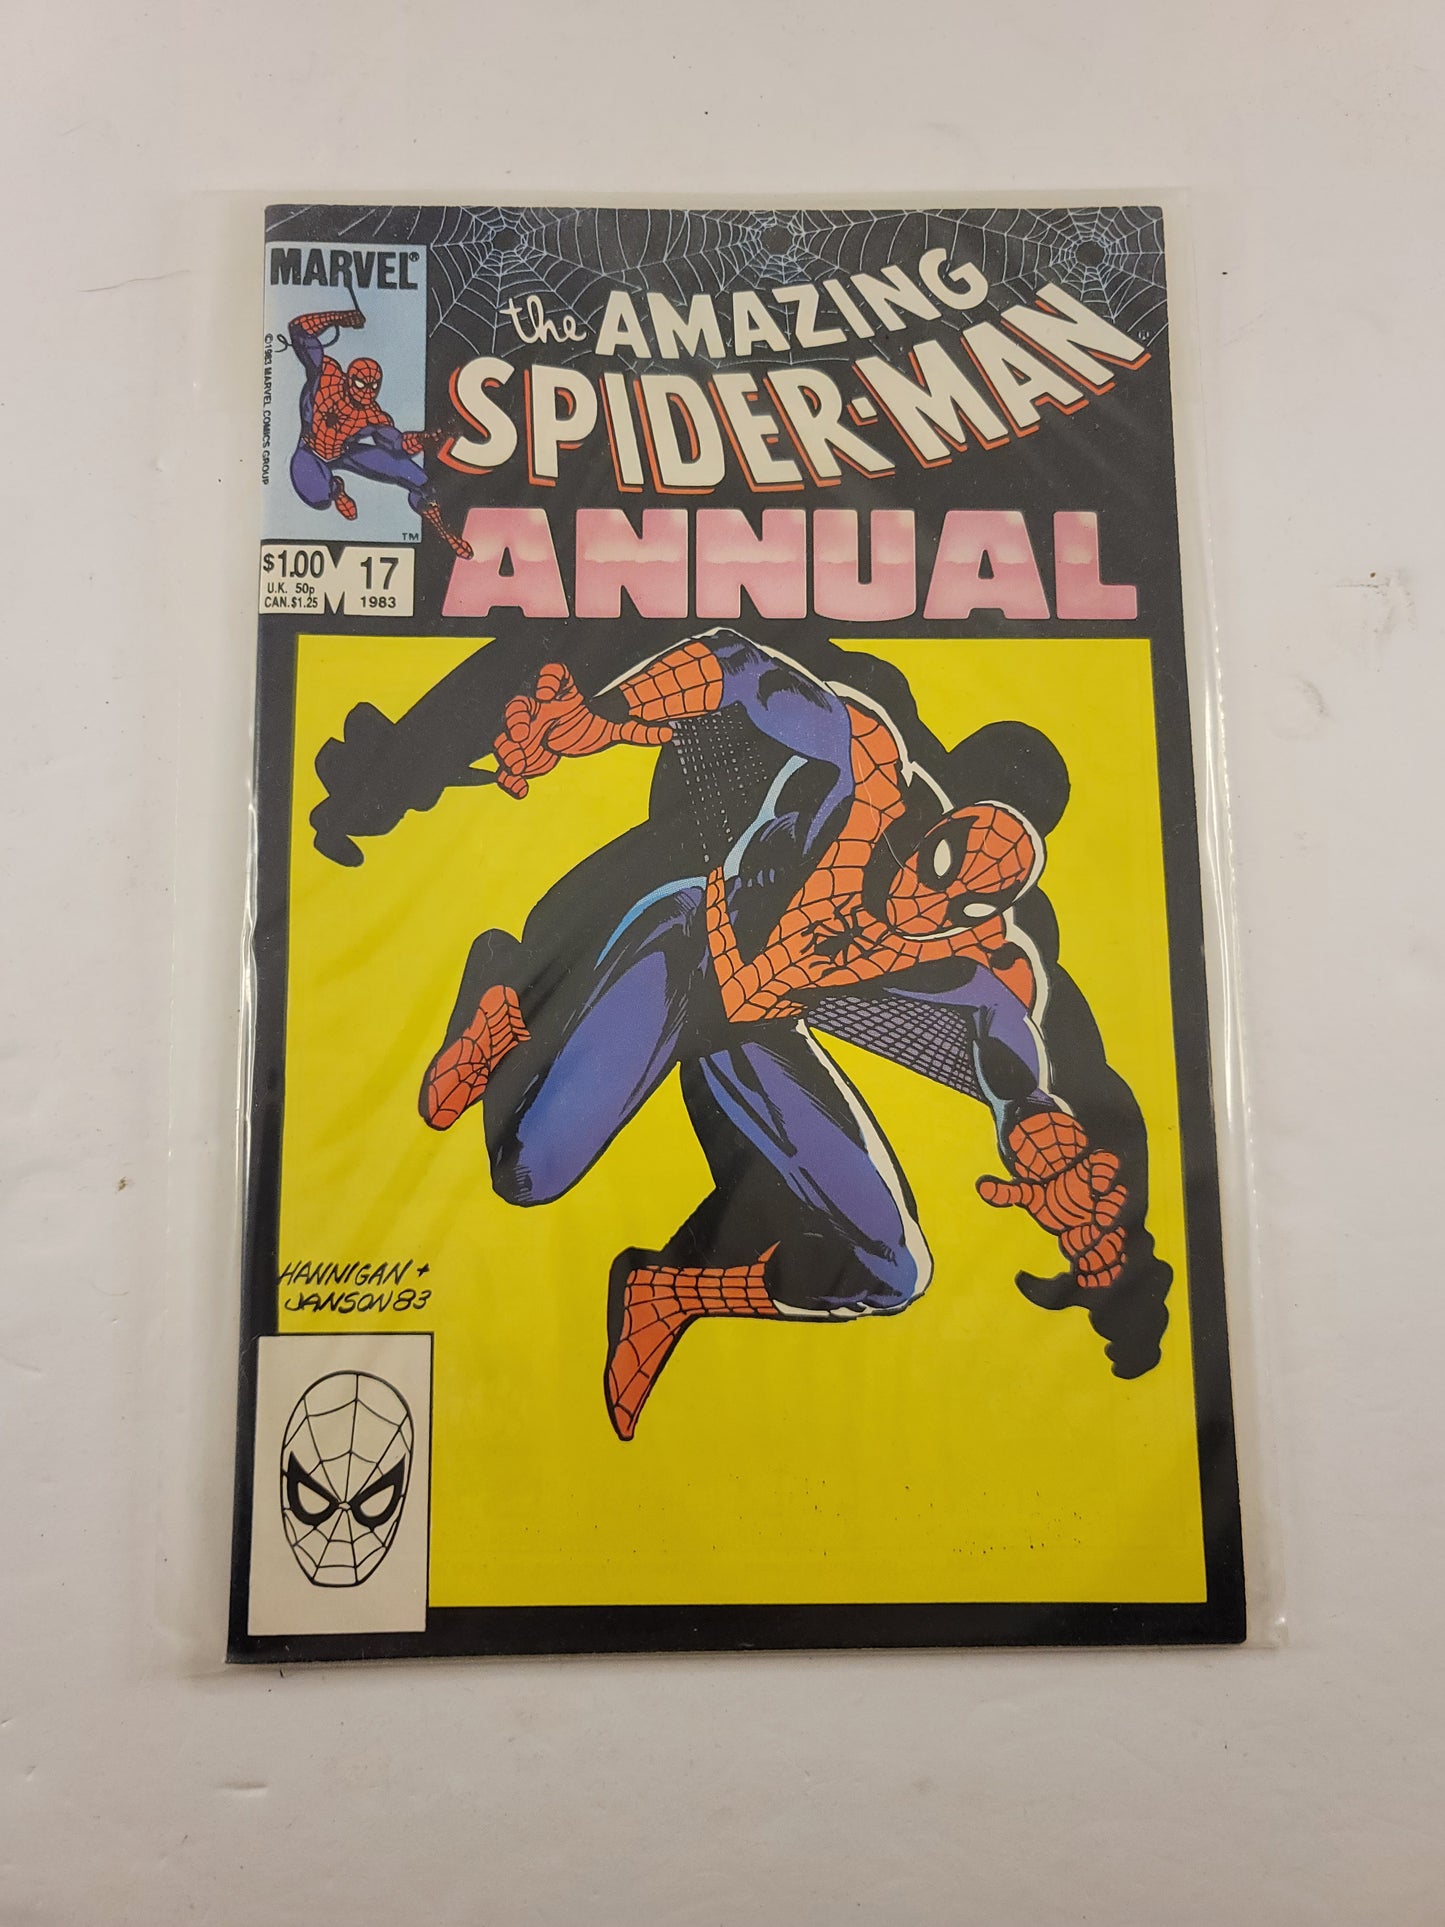 Amazing Spider-Man Volume 1 Annual Issue 17 (December 1983) Marvel Comics